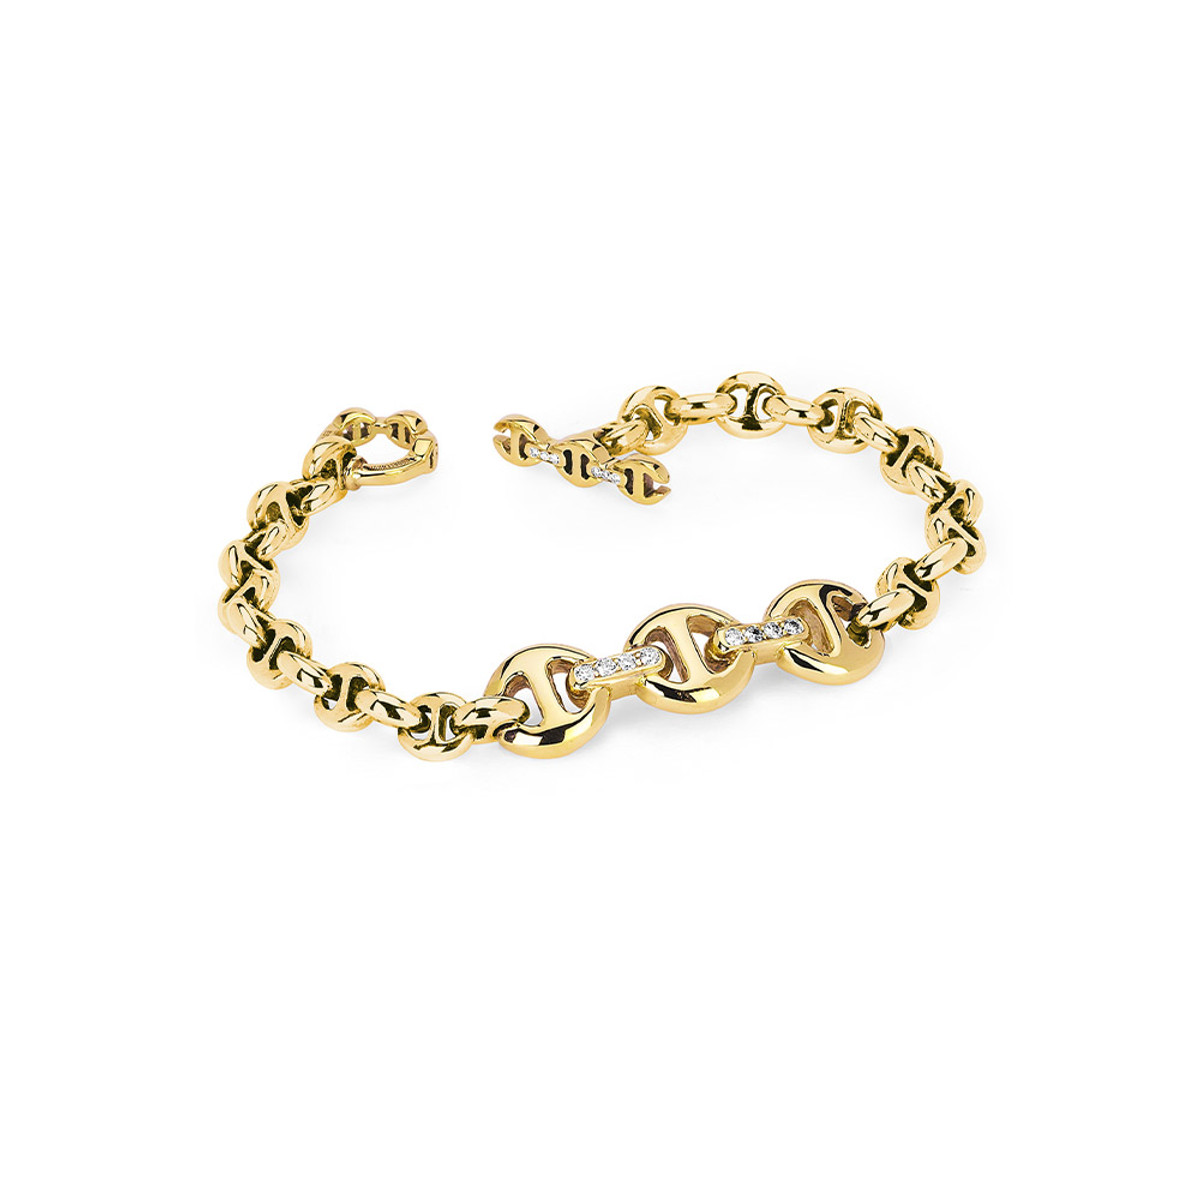 Hoorsenbuhs 18K Yellow Gold ID Bracelet-57491 Product Image